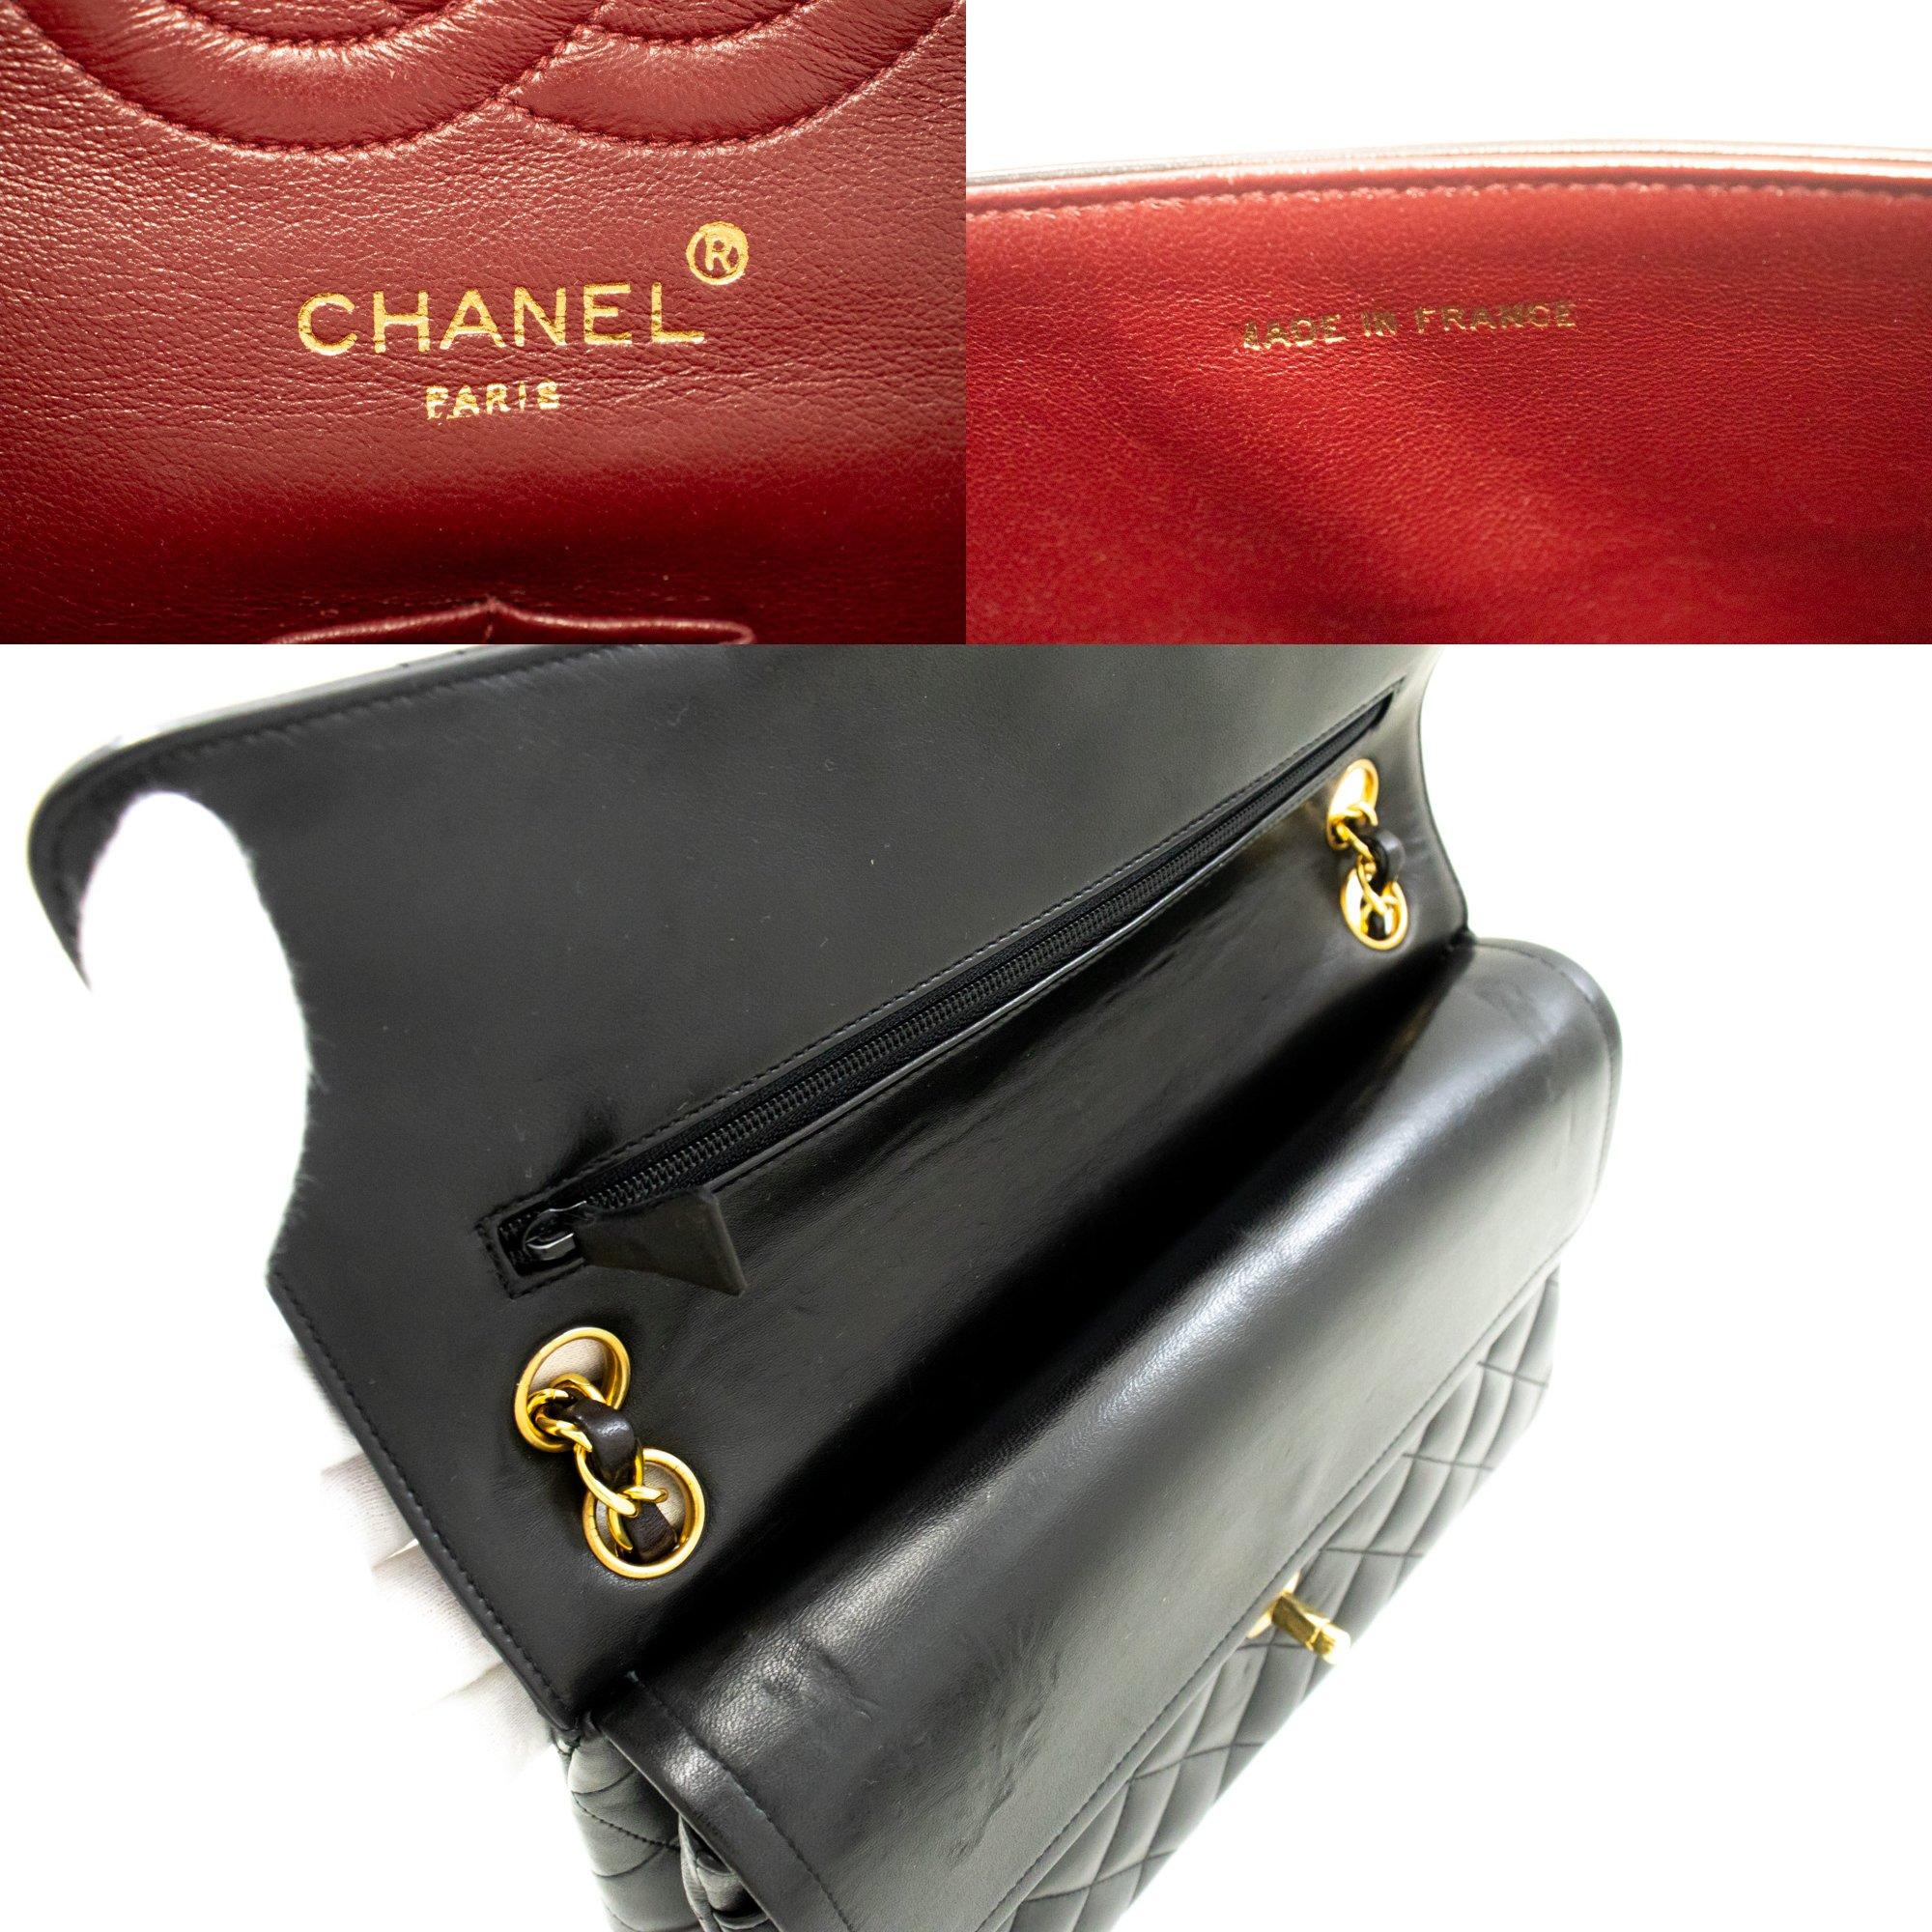 CHANEL Paris Limited Chain Shoulder Bag Black Double Flap Quilted For Sale 4